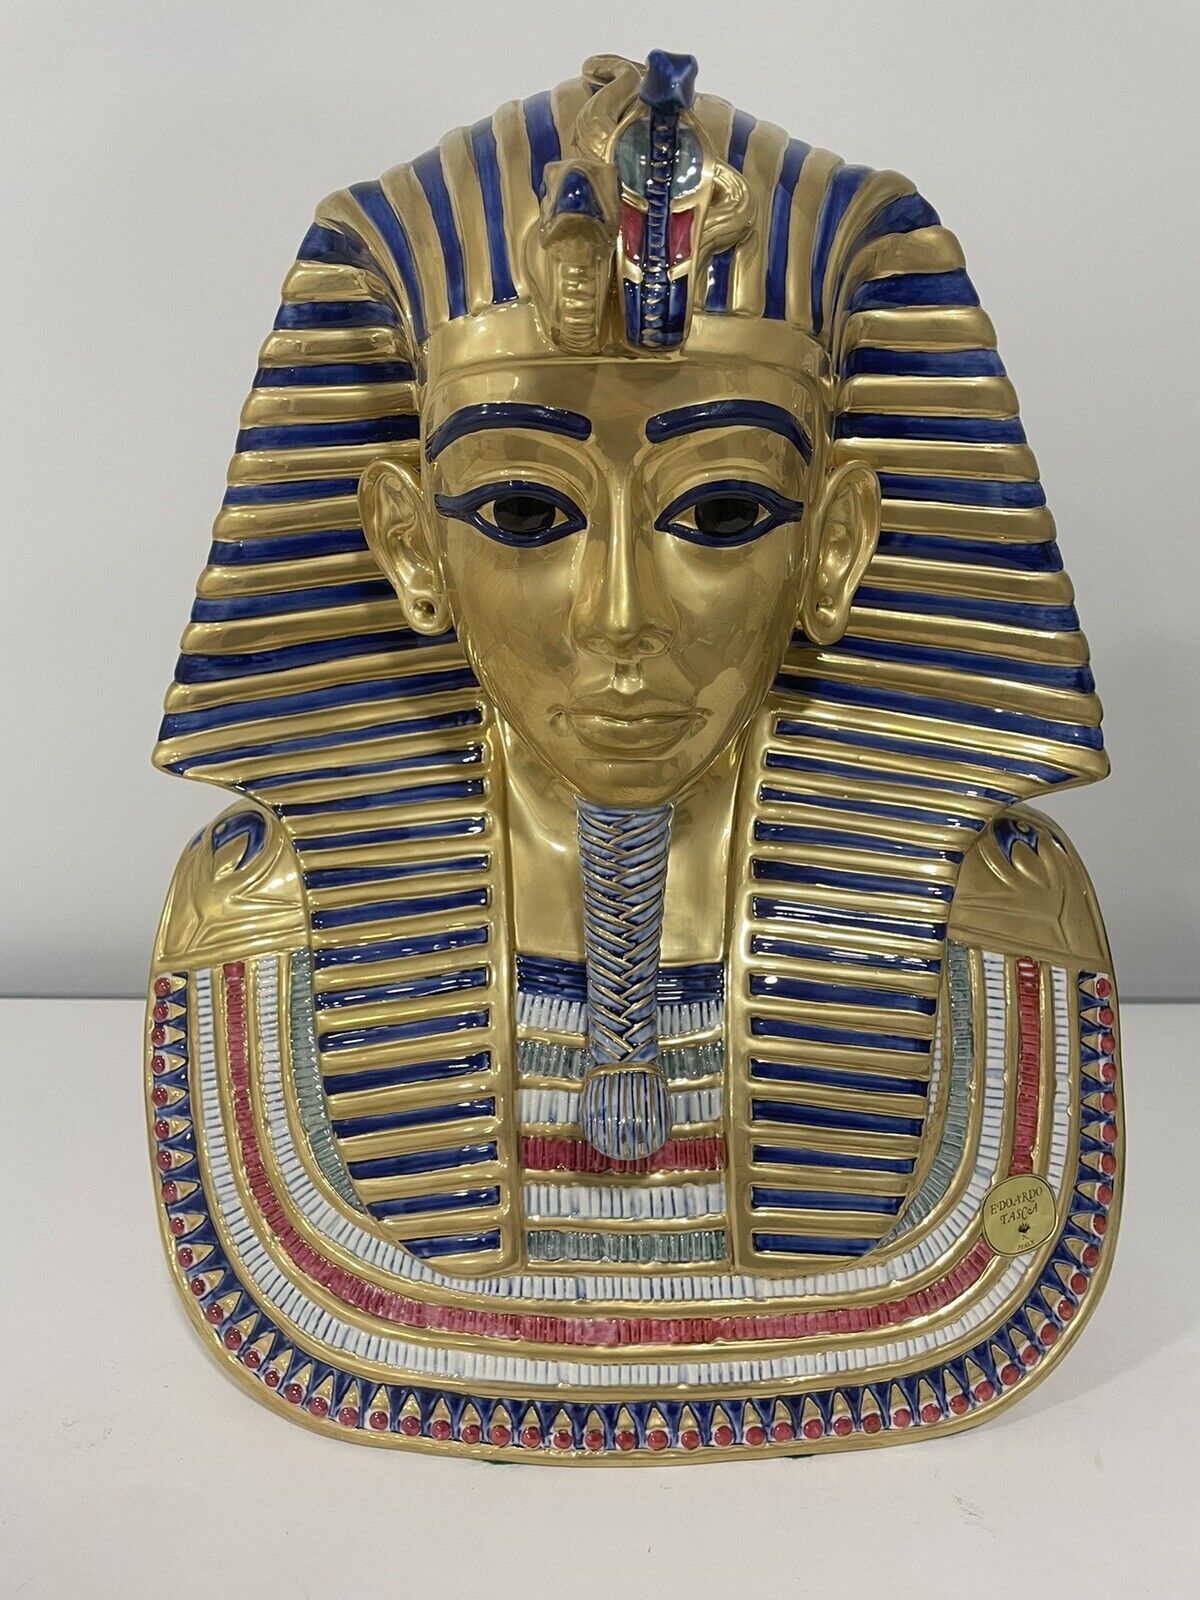 Large Vintage Italian Bust of King Tutankhamun by Eduardo Tasca 15” x 12” x 9”